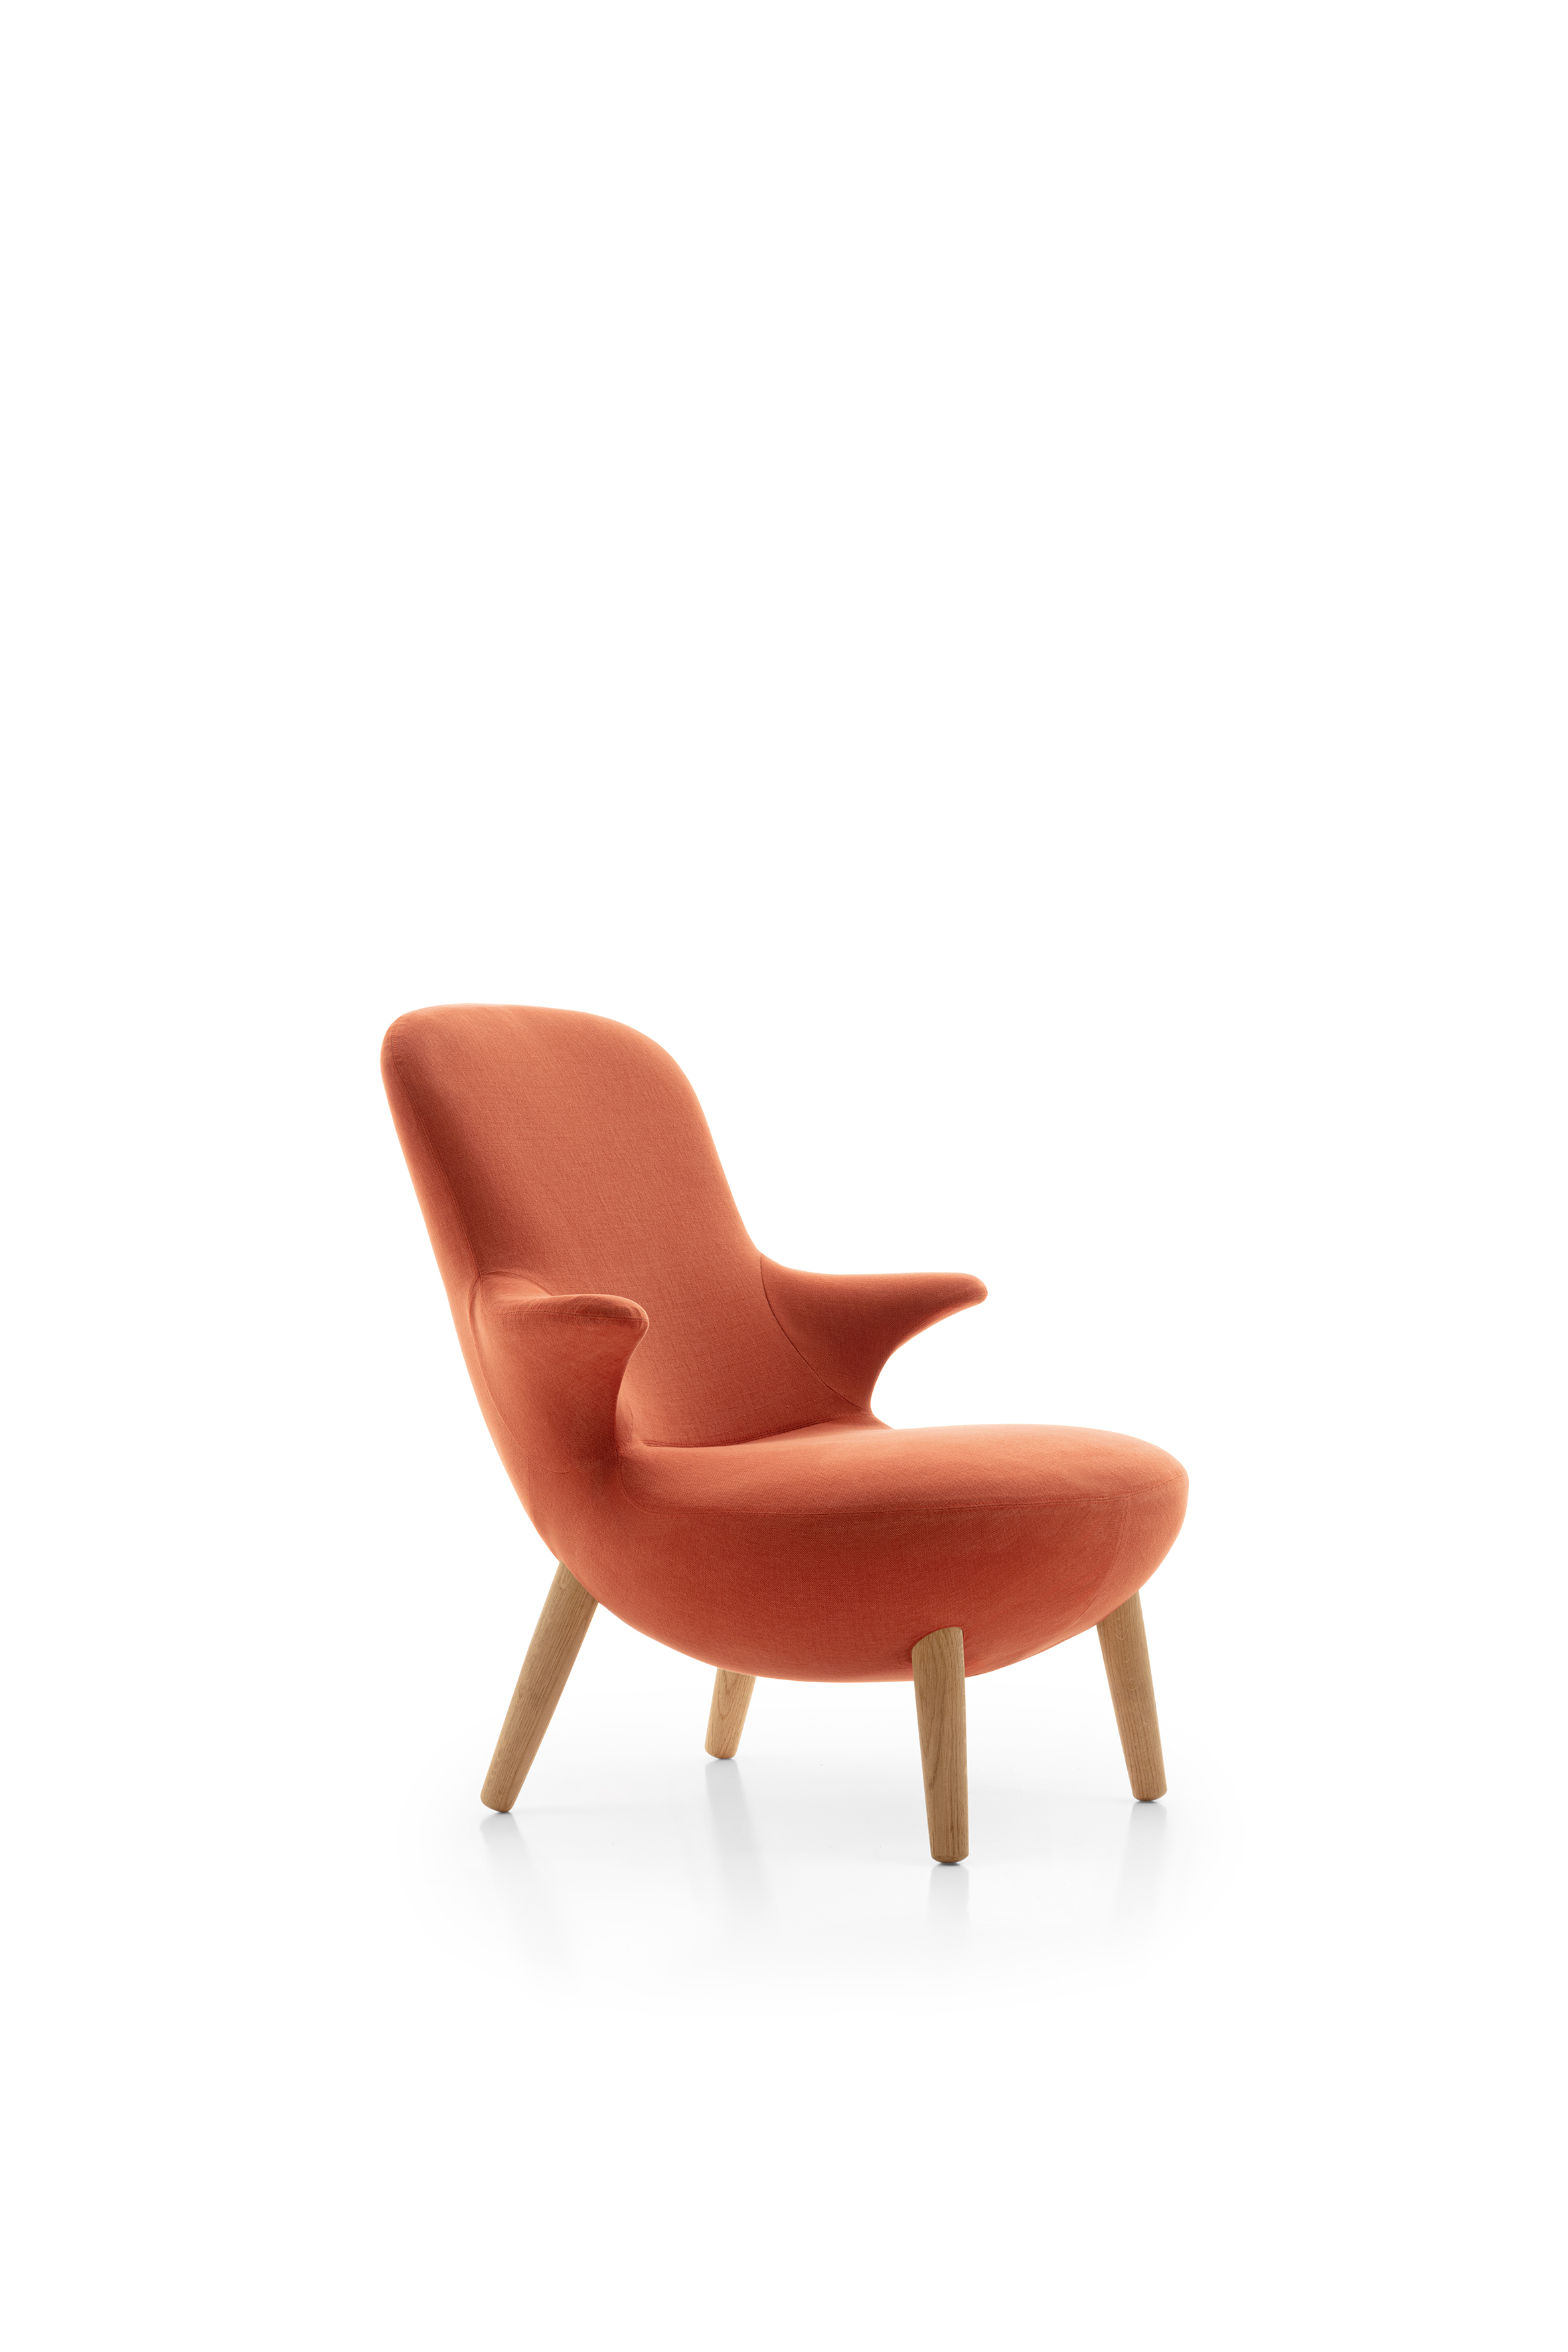 Milan Design Week B&B Italia Omoi chair in orange